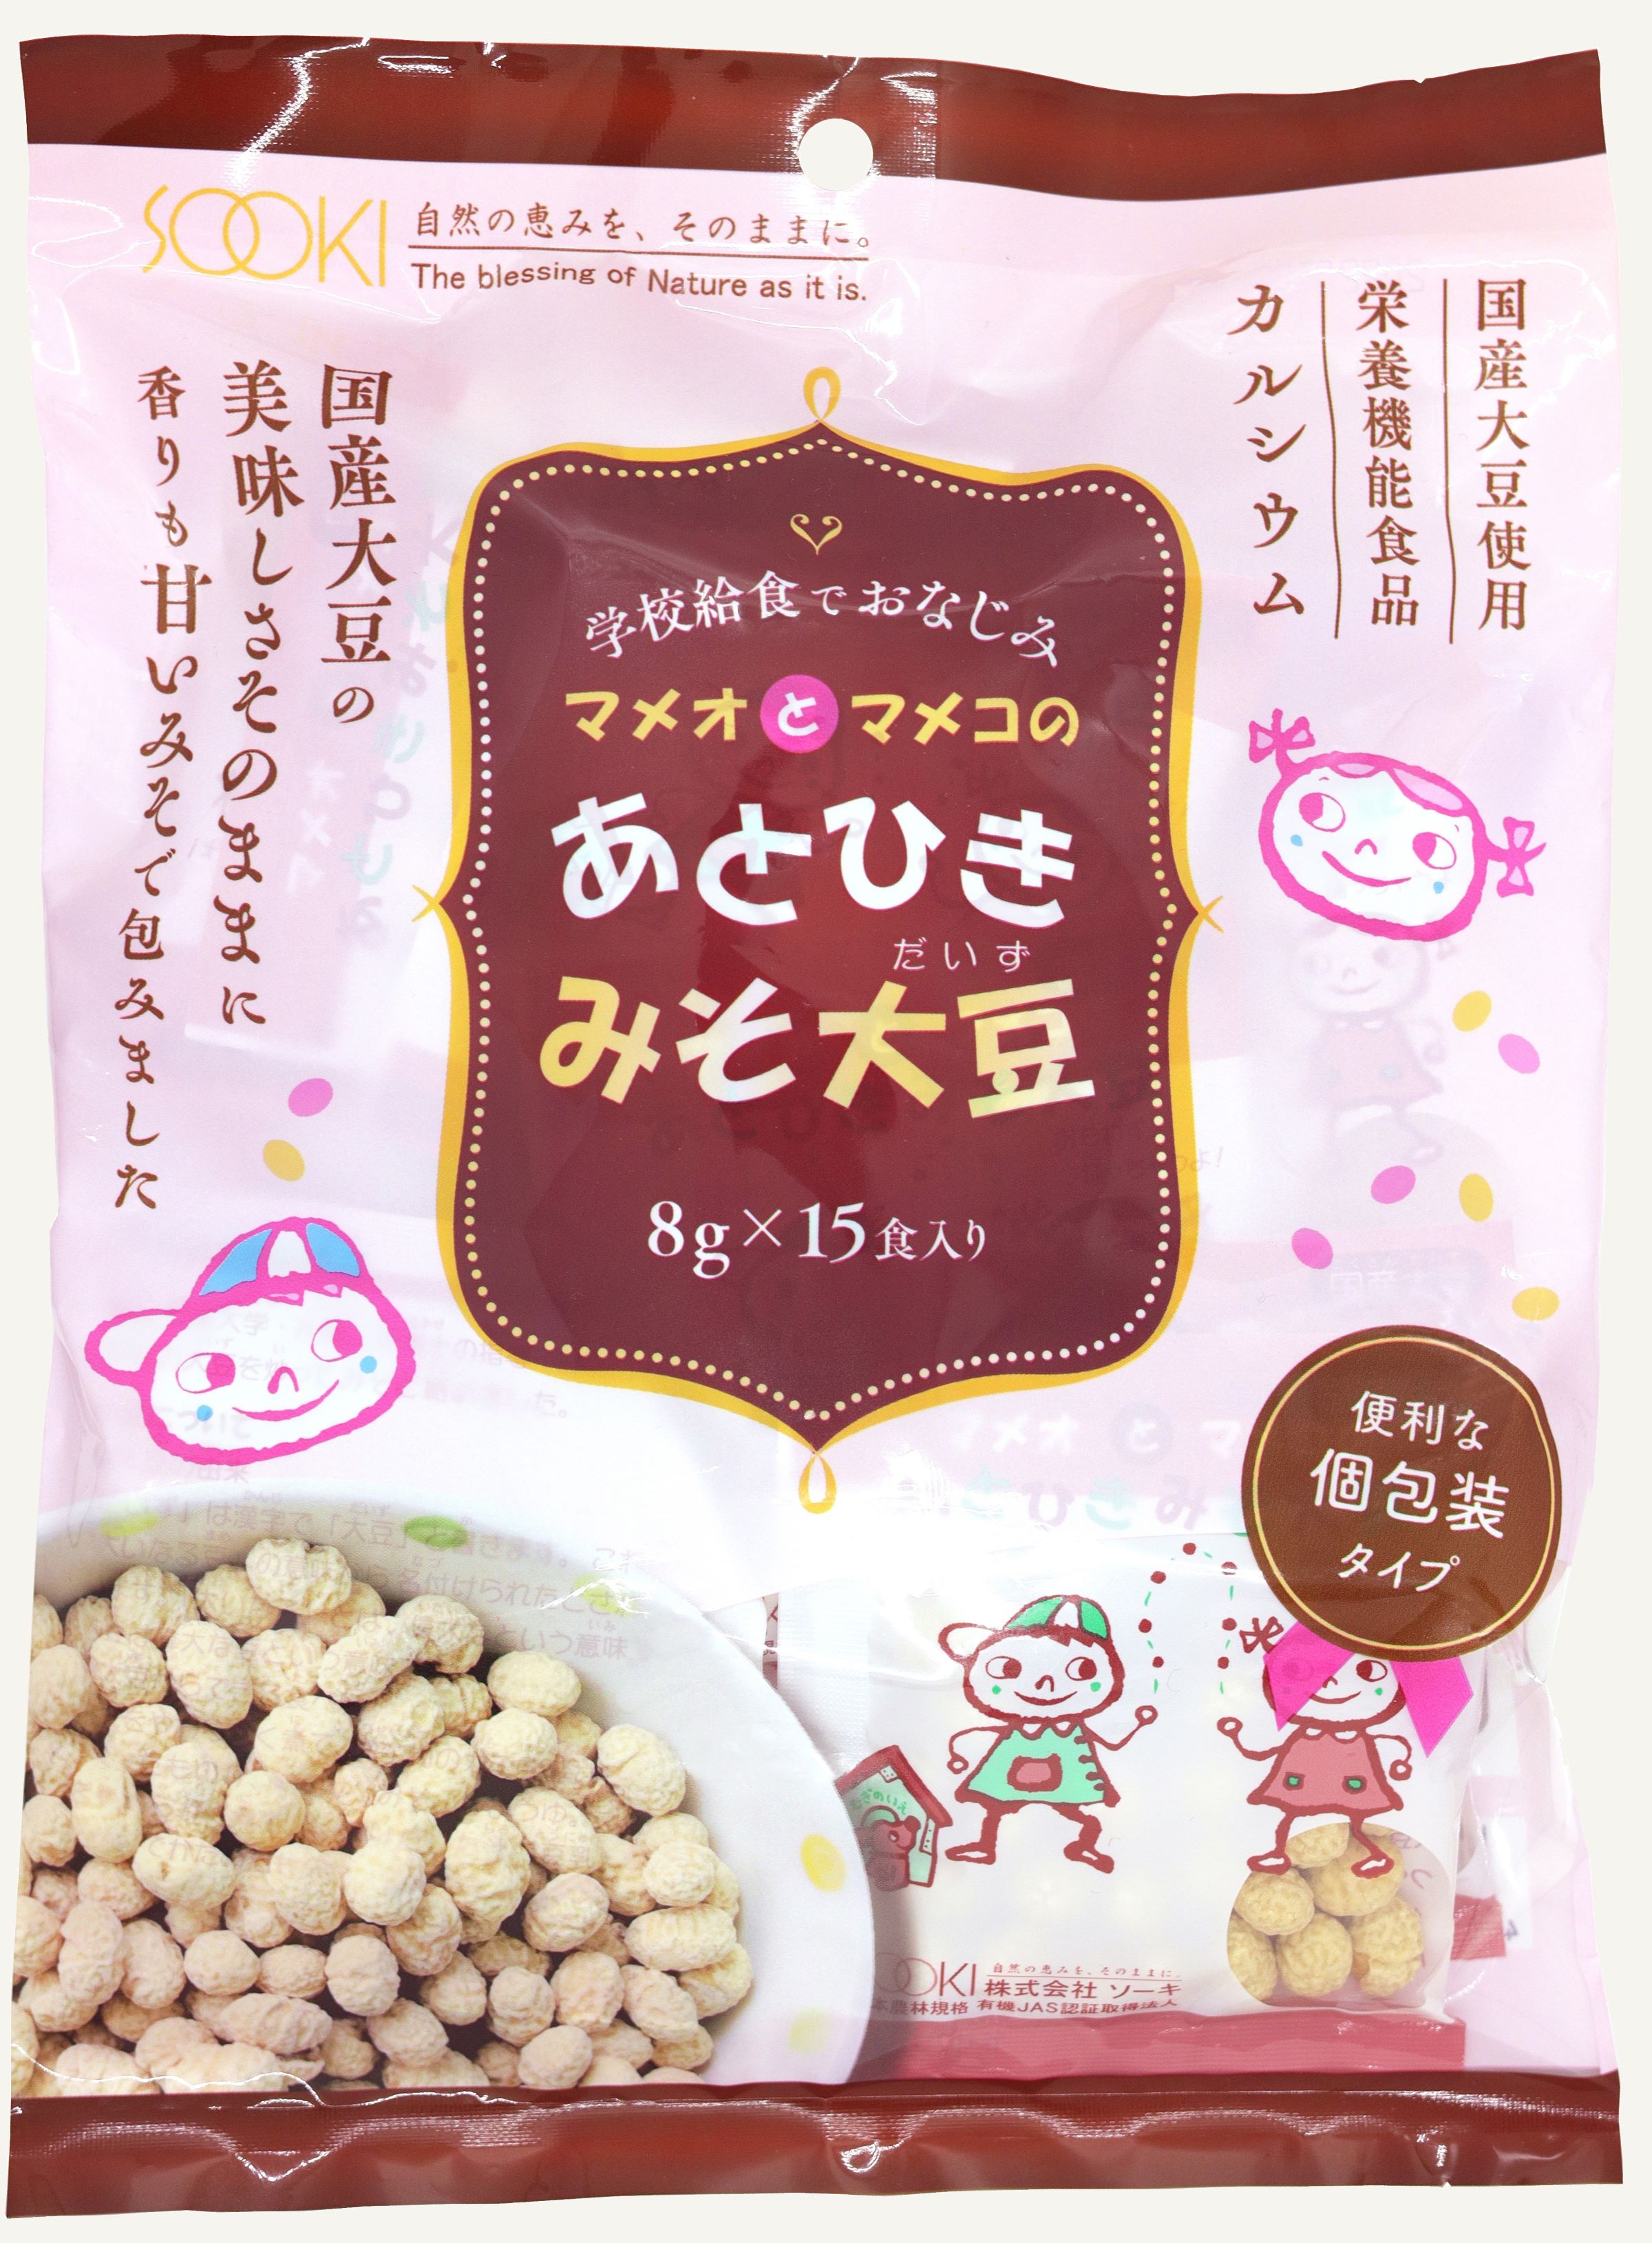 Mameo and Mameko's Atohiki Miso Soybeans